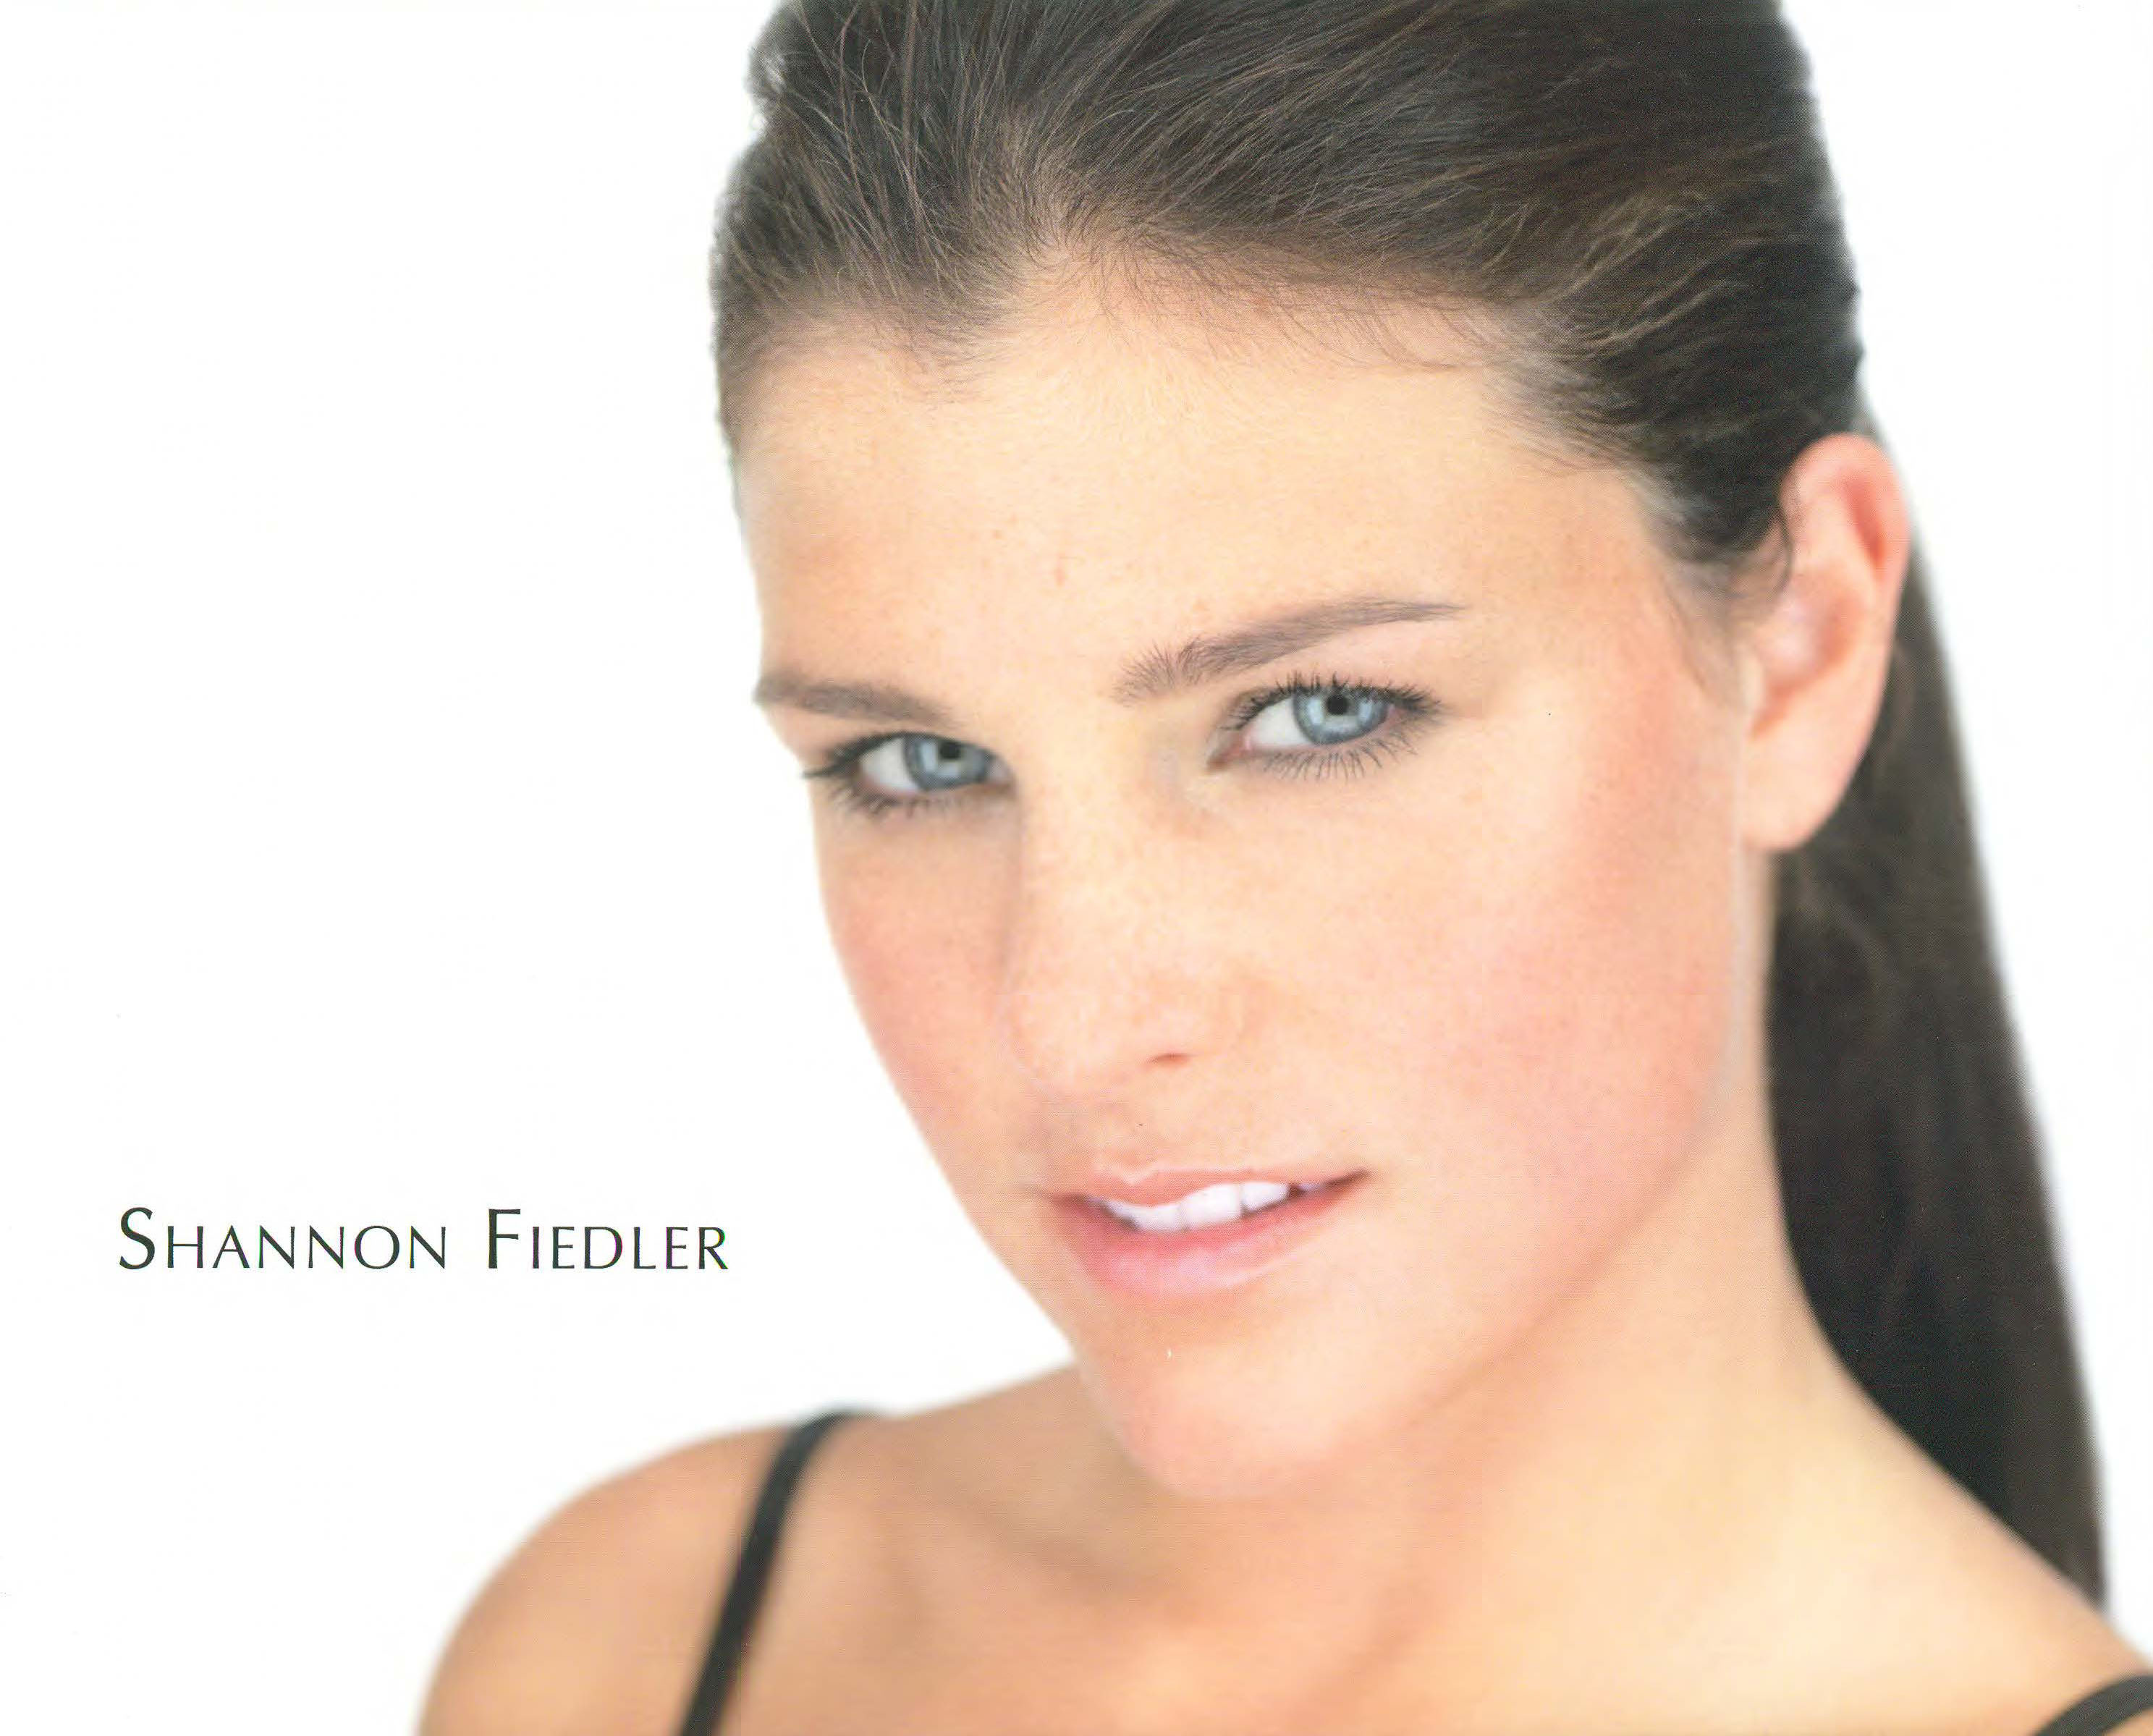 Shannon Fiedler